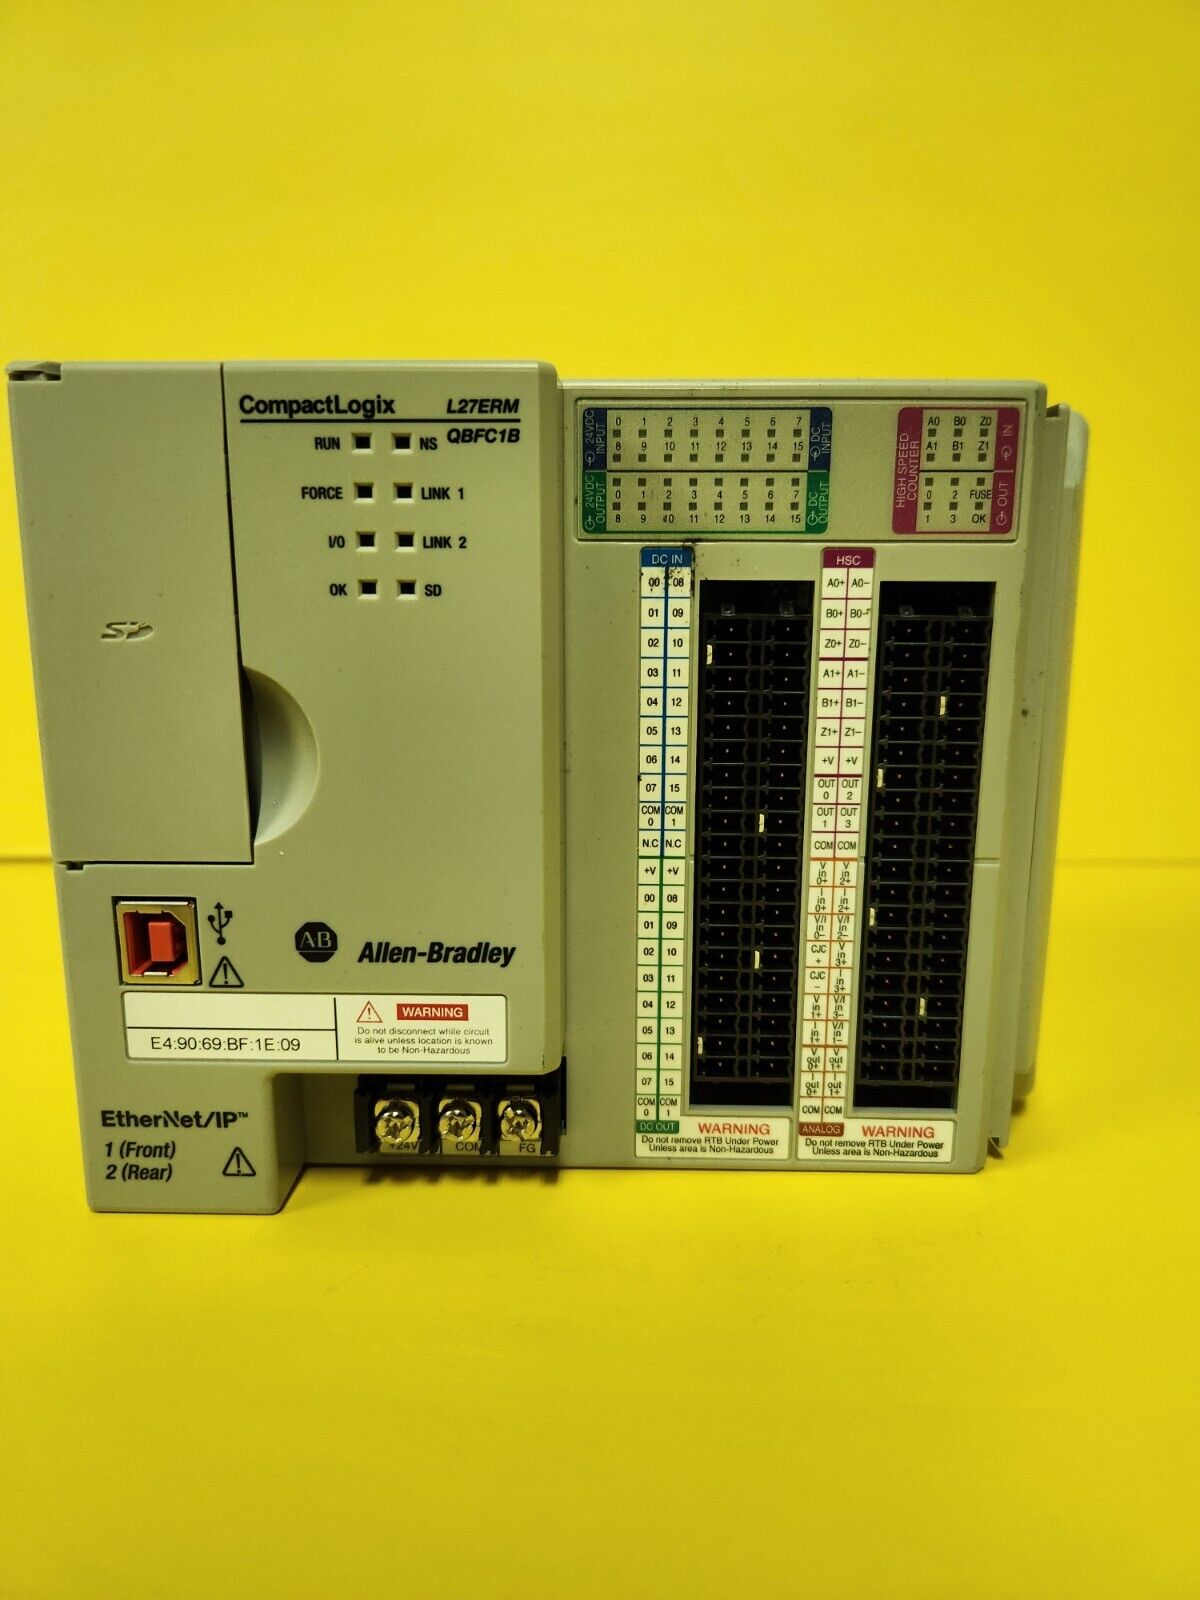 Allen Bradley 1769-L27ERM-QBFC1B CompactLogix Controller Series A 1769-ECR